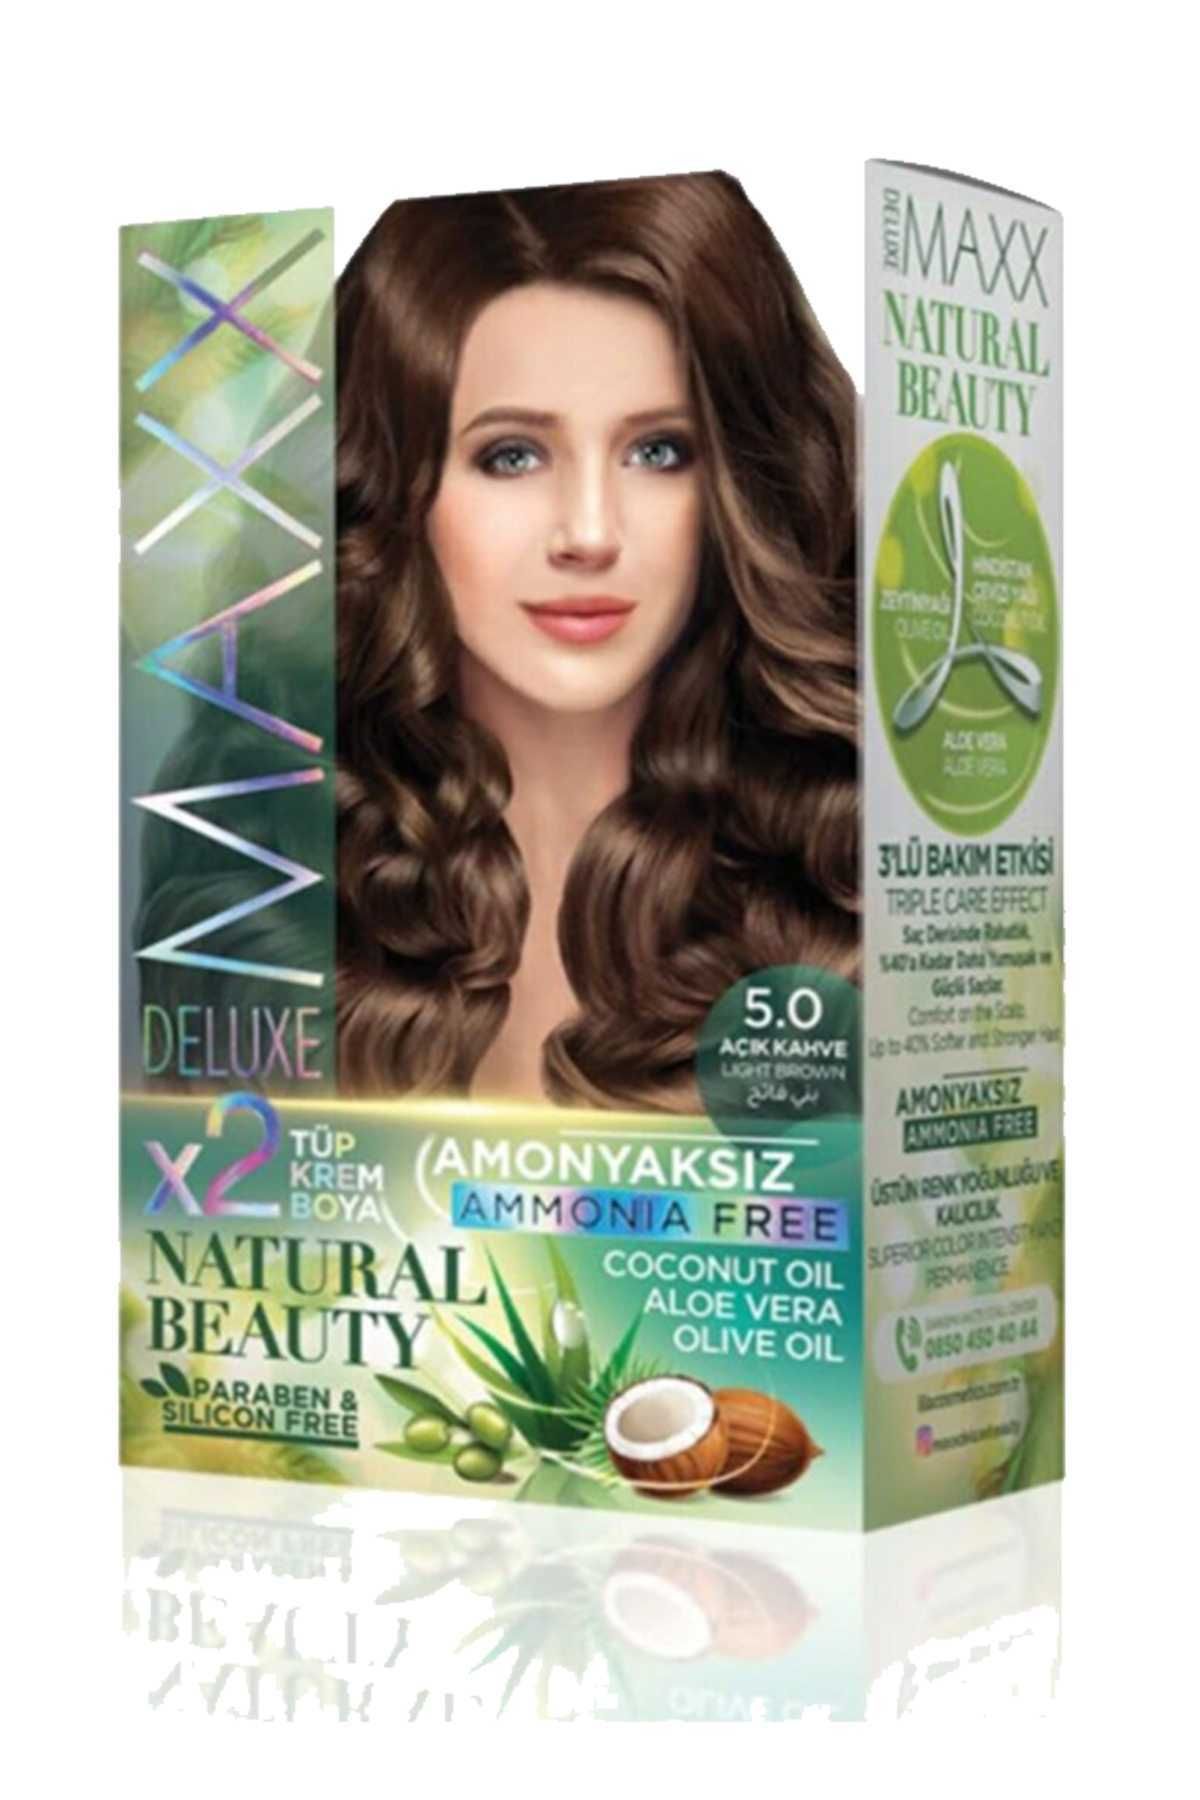 MAXX DELUXE Natural Beauty Amonyaksız Saç Boyası 5.0 Açık Kahve